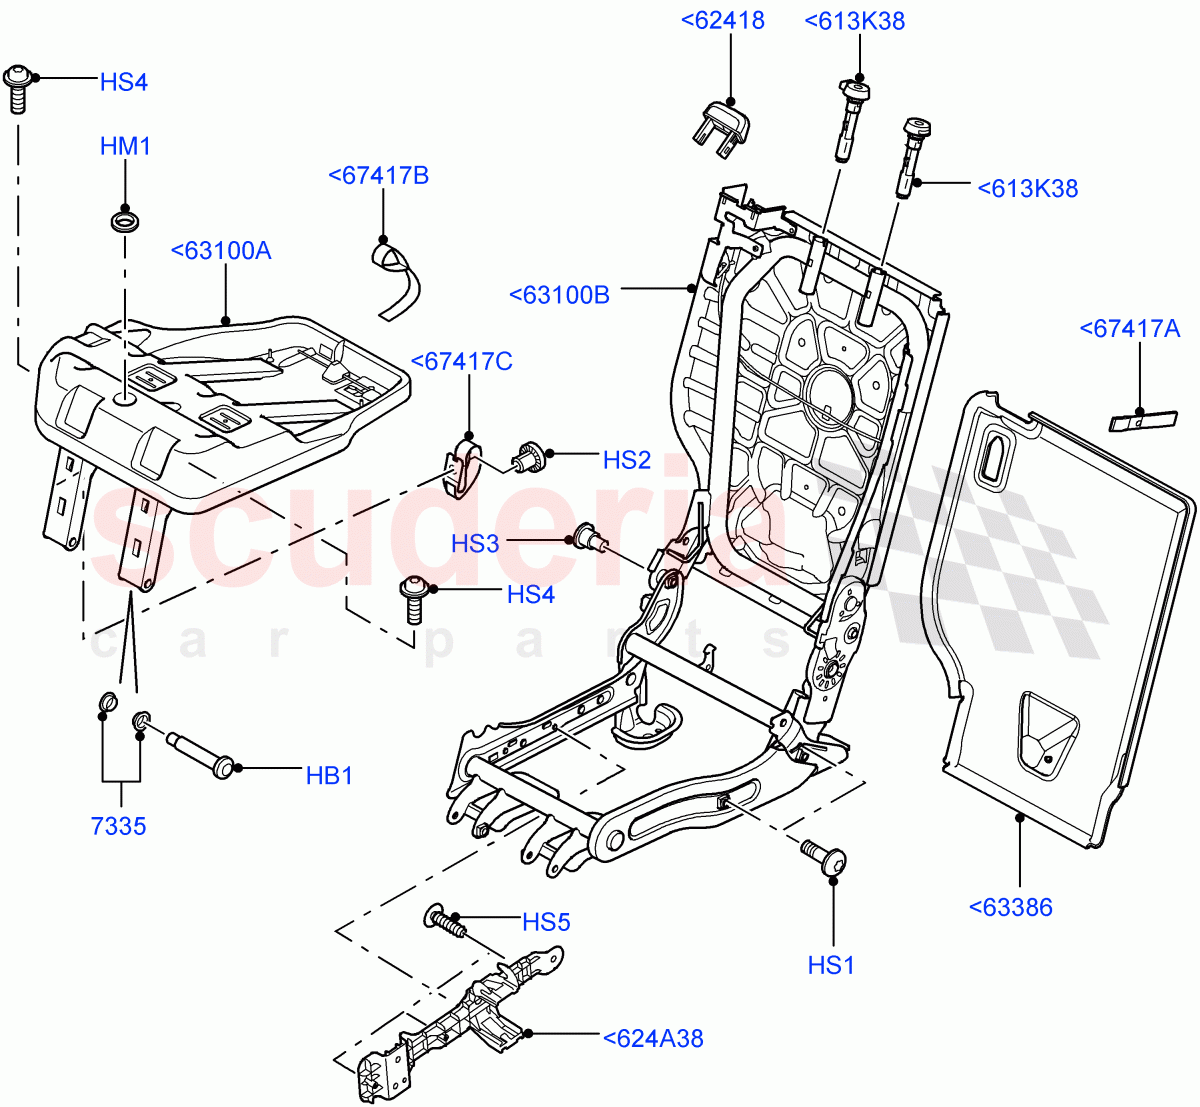 Rear Seat Frame((V)TO9A999999) of Land Rover Land Rover Range Rover Sport (2005-2009) [3.6 V8 32V DOHC EFI Diesel]